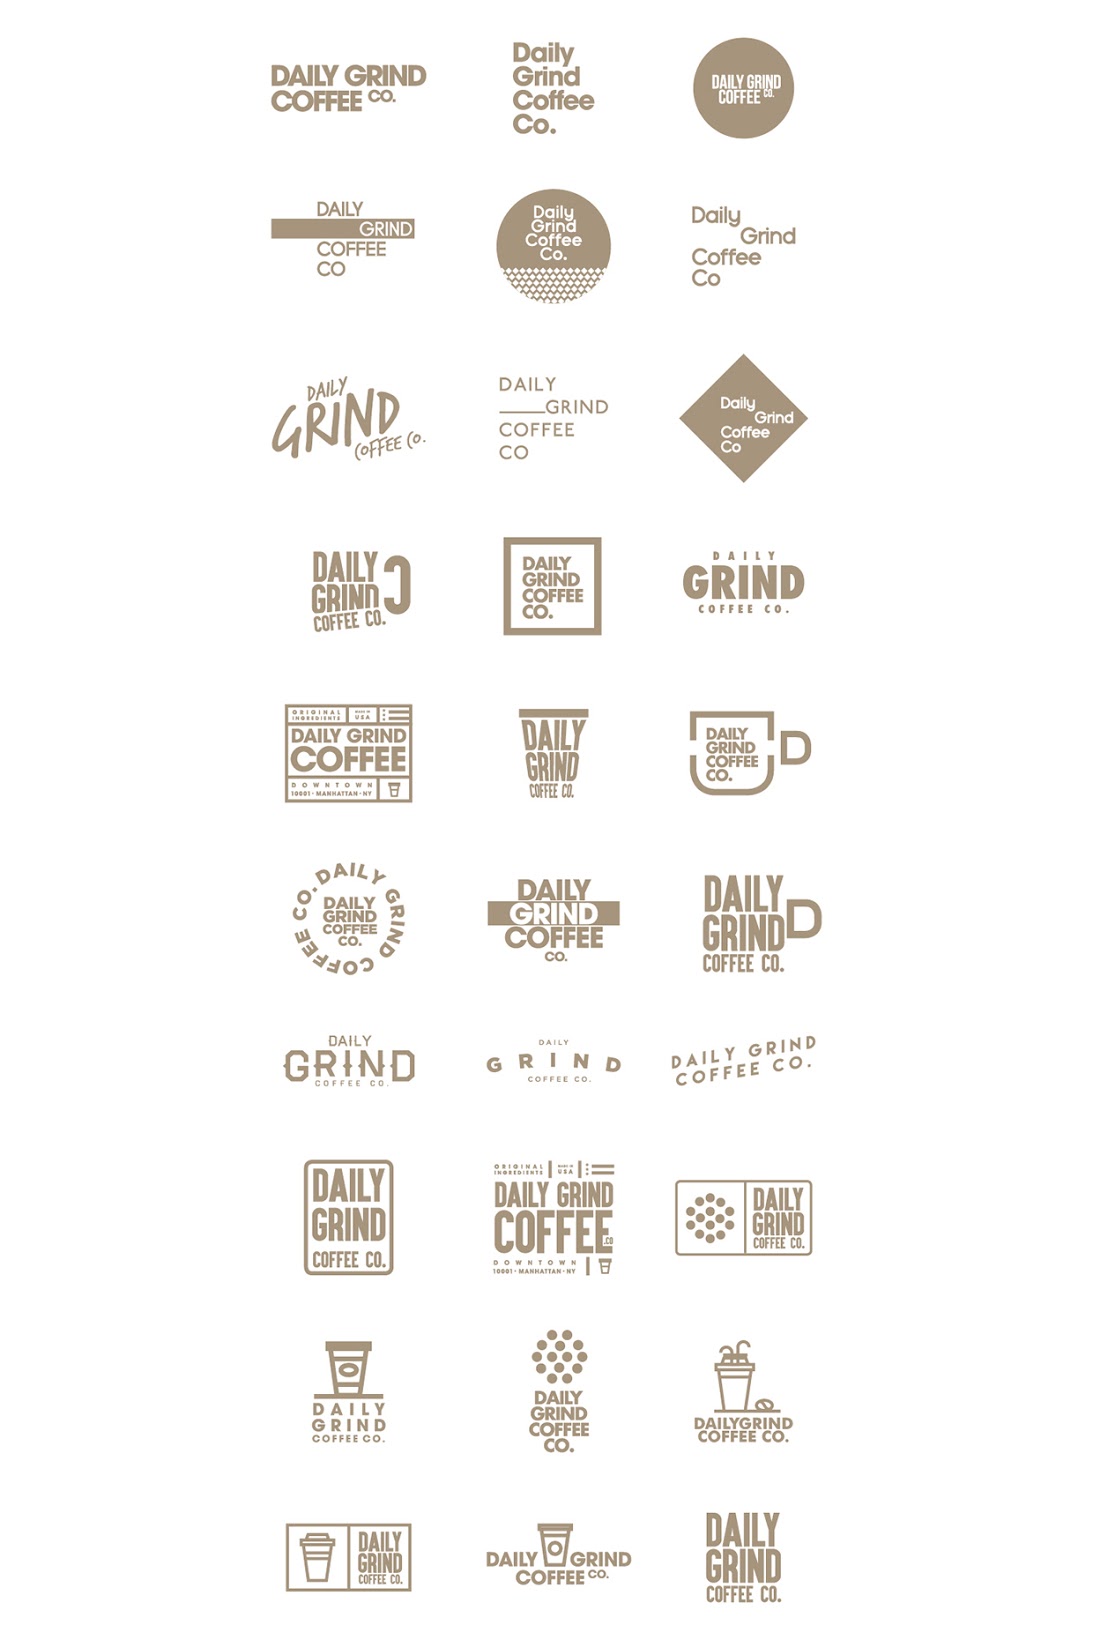 Daily Grind咖啡品牌和包装设计